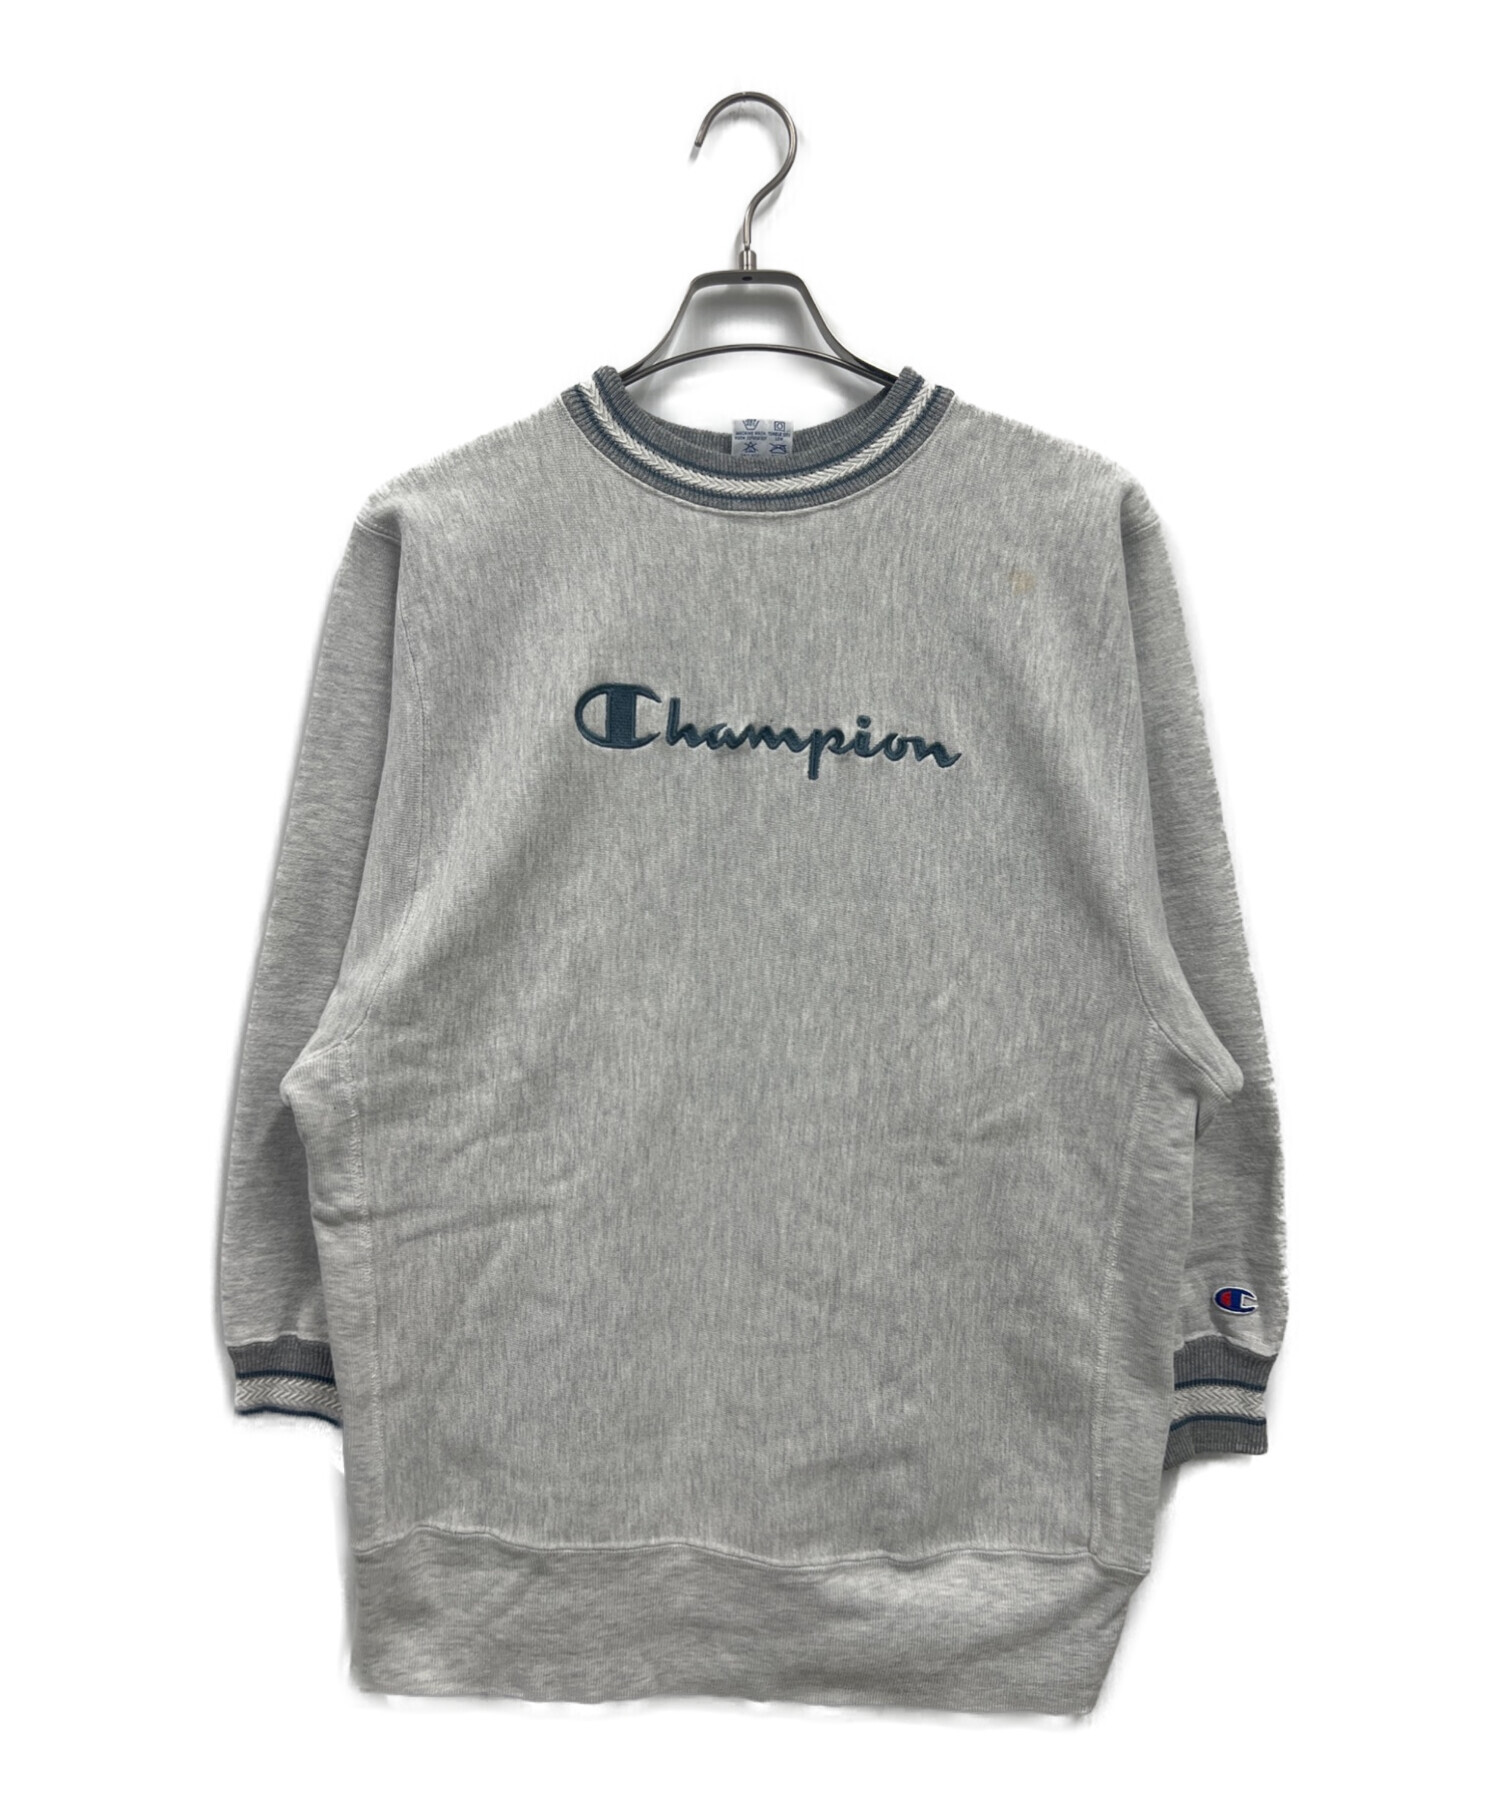 Champion チャンピオン プレミアムリバースウィーブ 英文字 スウェット 大きいサイズ  刺繍 グレー (メンズ XL)   O1993